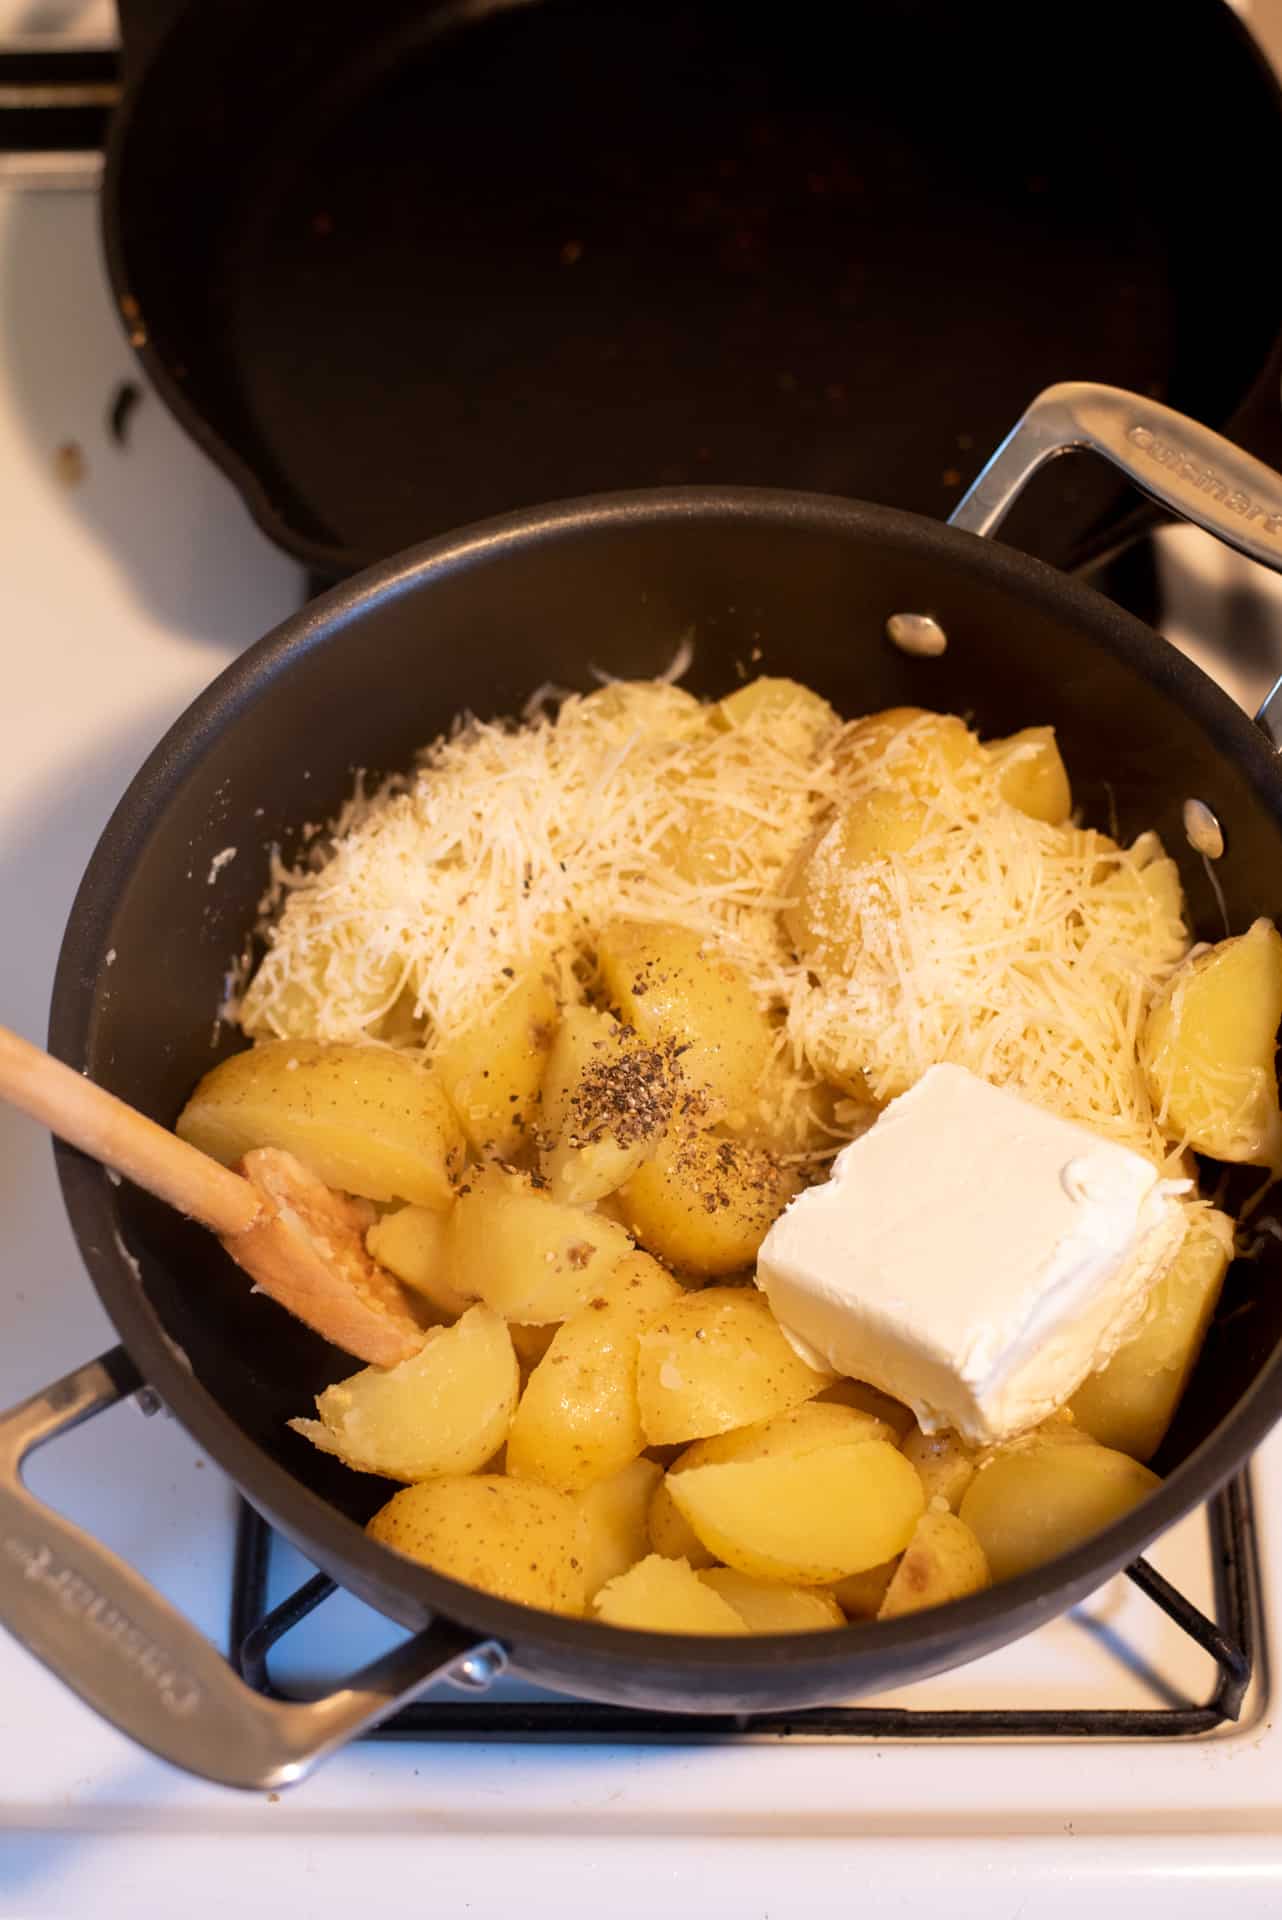 Mashed potato ingredients in a black pot.